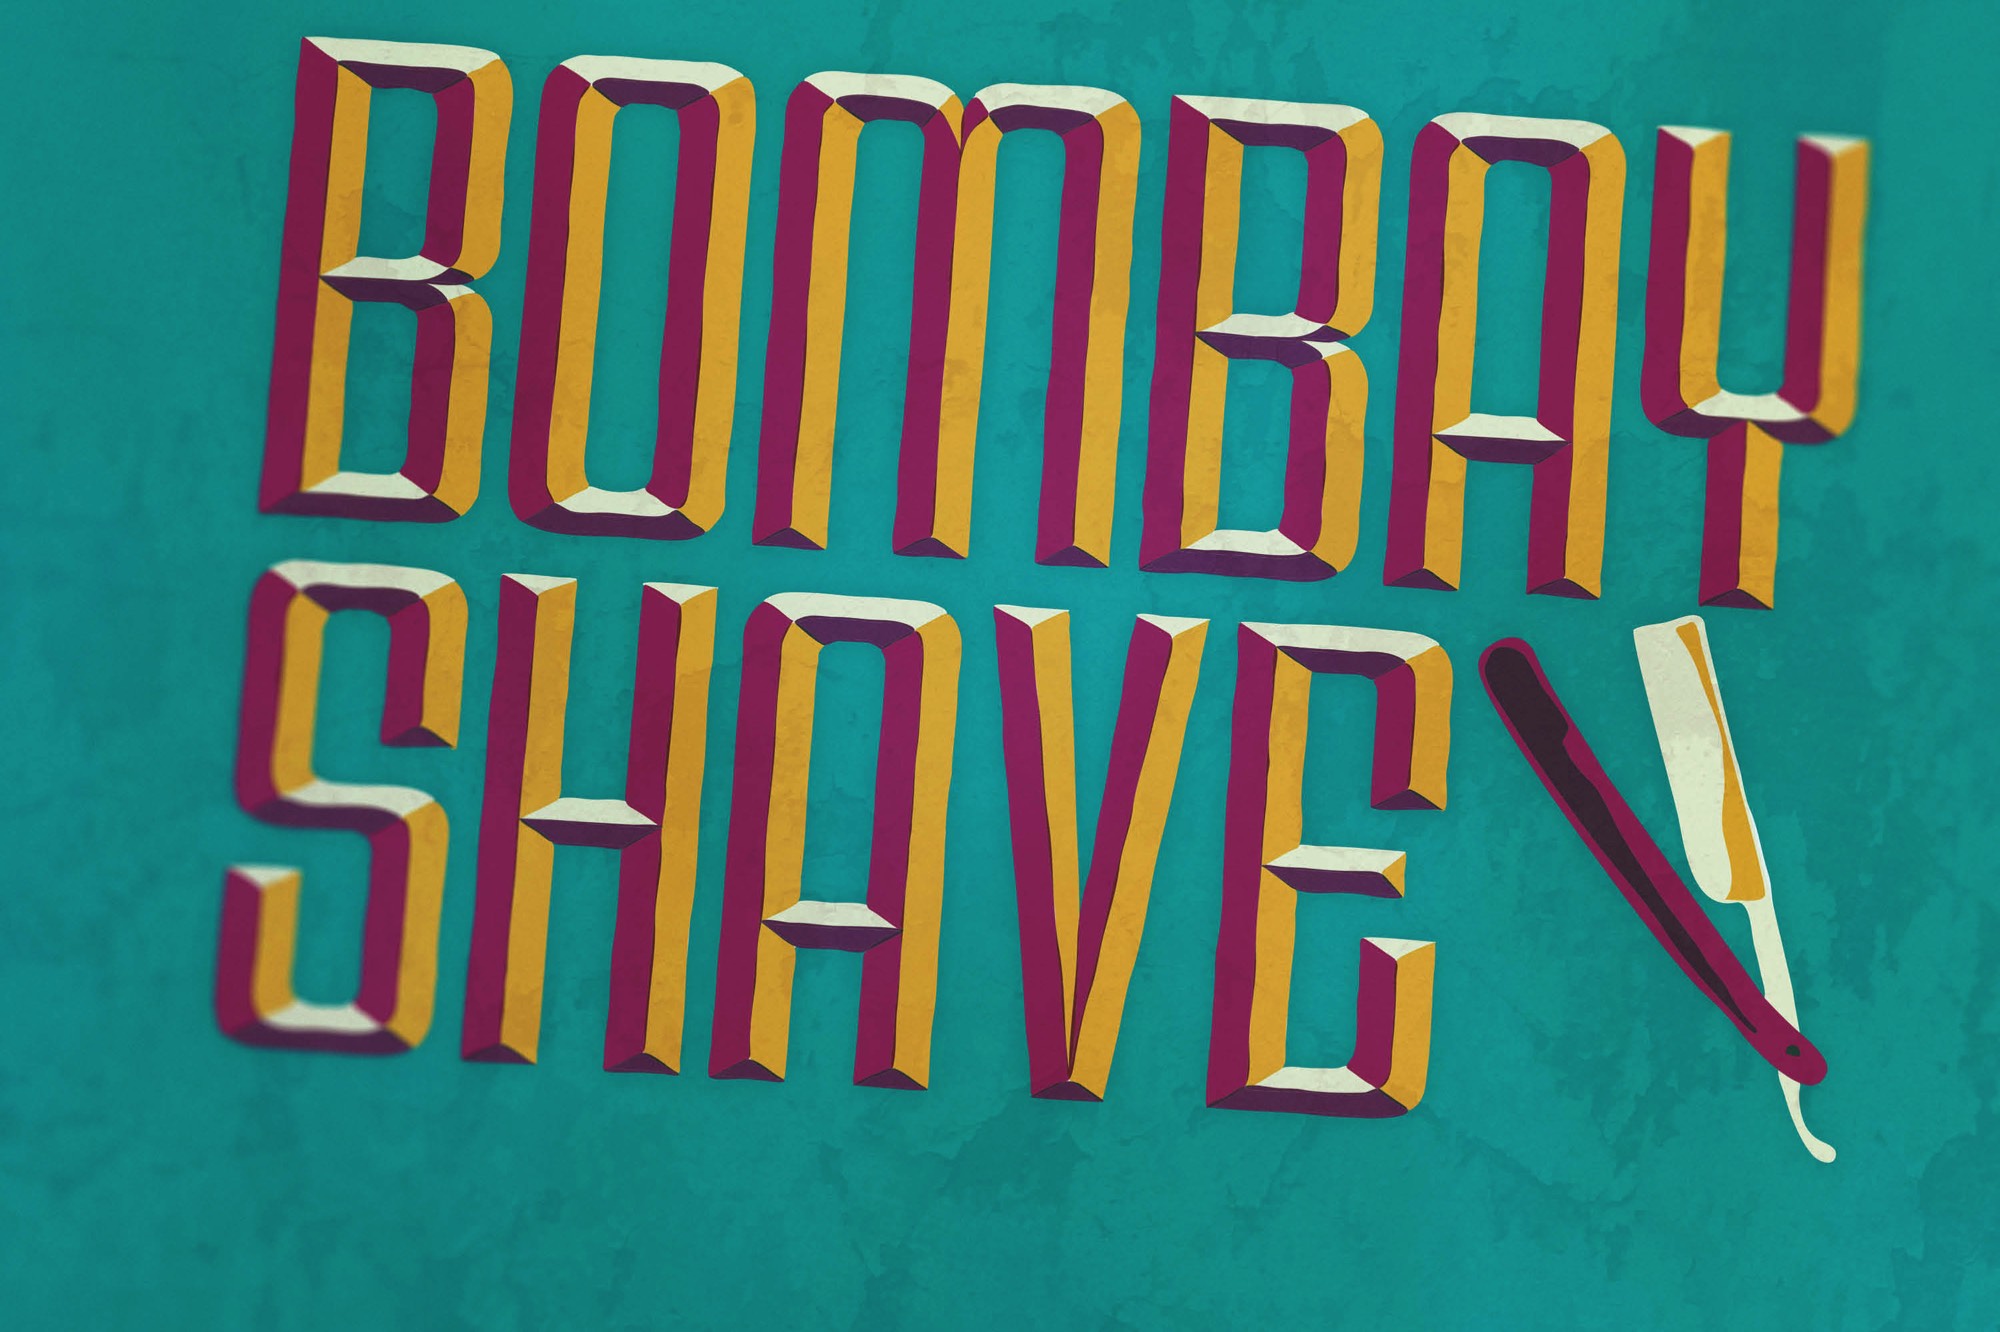 Bombay Shave music festival barbershop brand